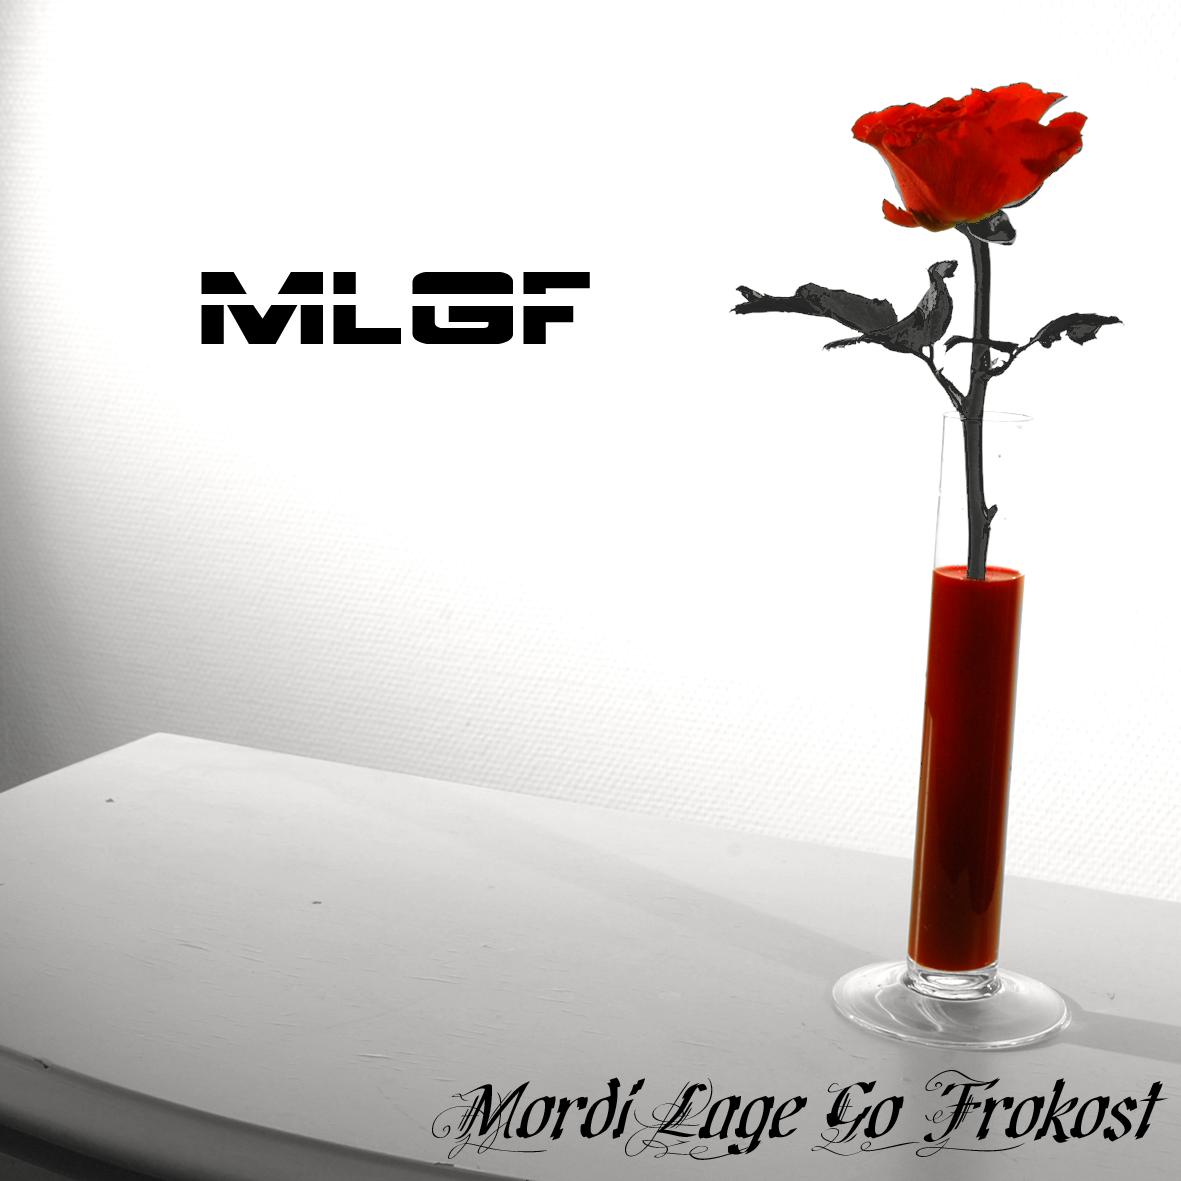 MLGF - Mordi Lage God Frokost cover 